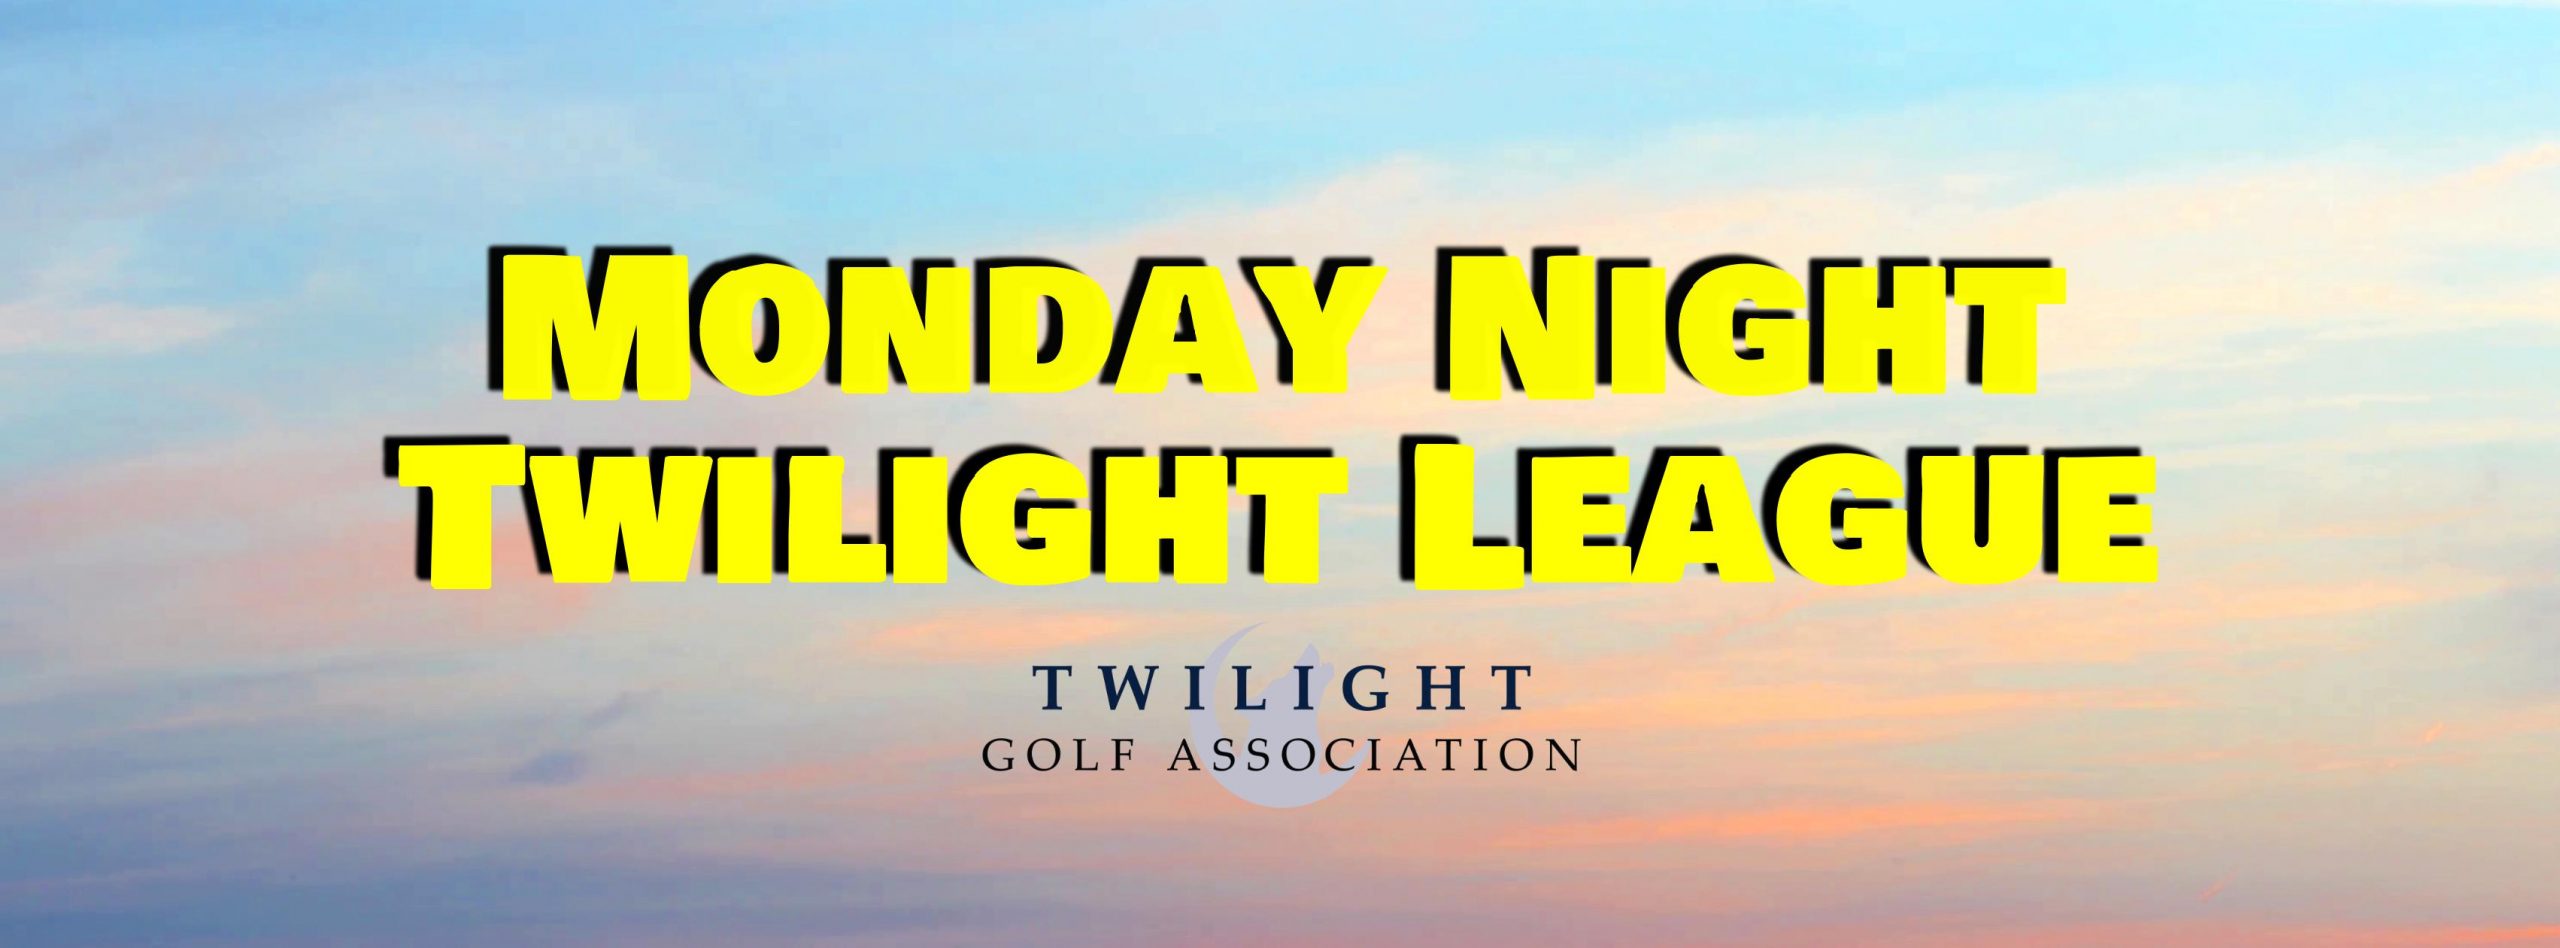 Monday Night Twilight League at Bey Lea Golf Course